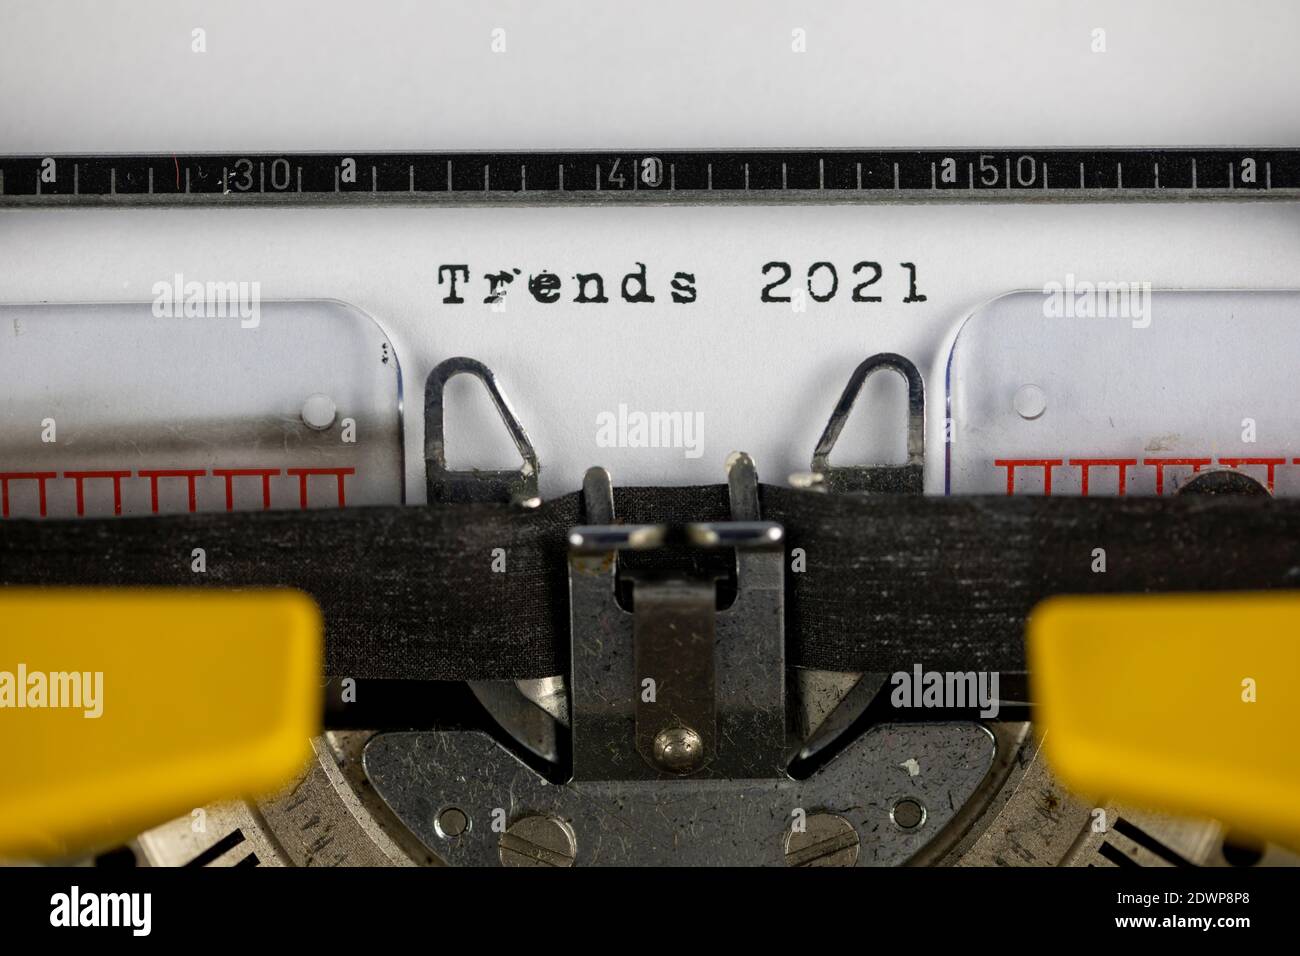 Trends 2021 written on an old typewriter Stock Photo